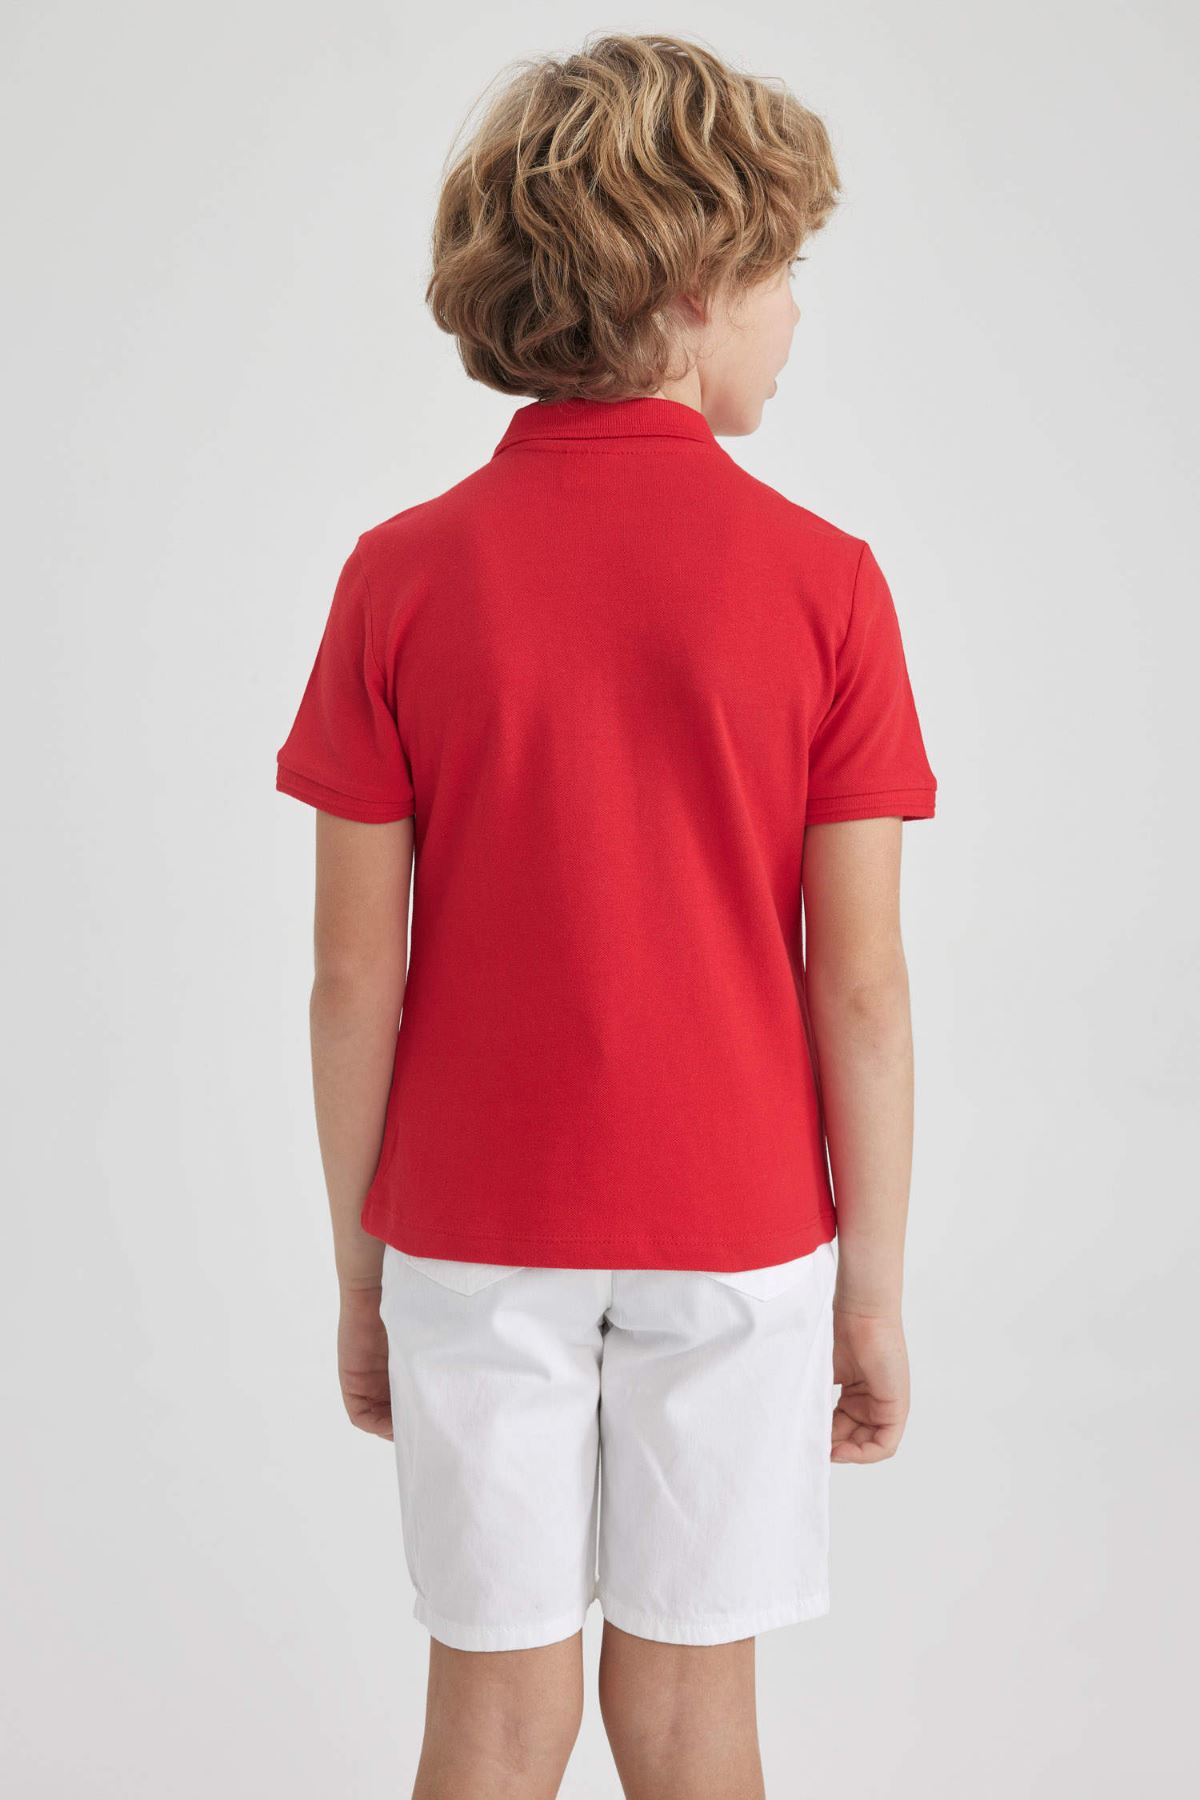 Defacto Erkek Çocuk Kırmızı Tişört - K1689A6/RD282